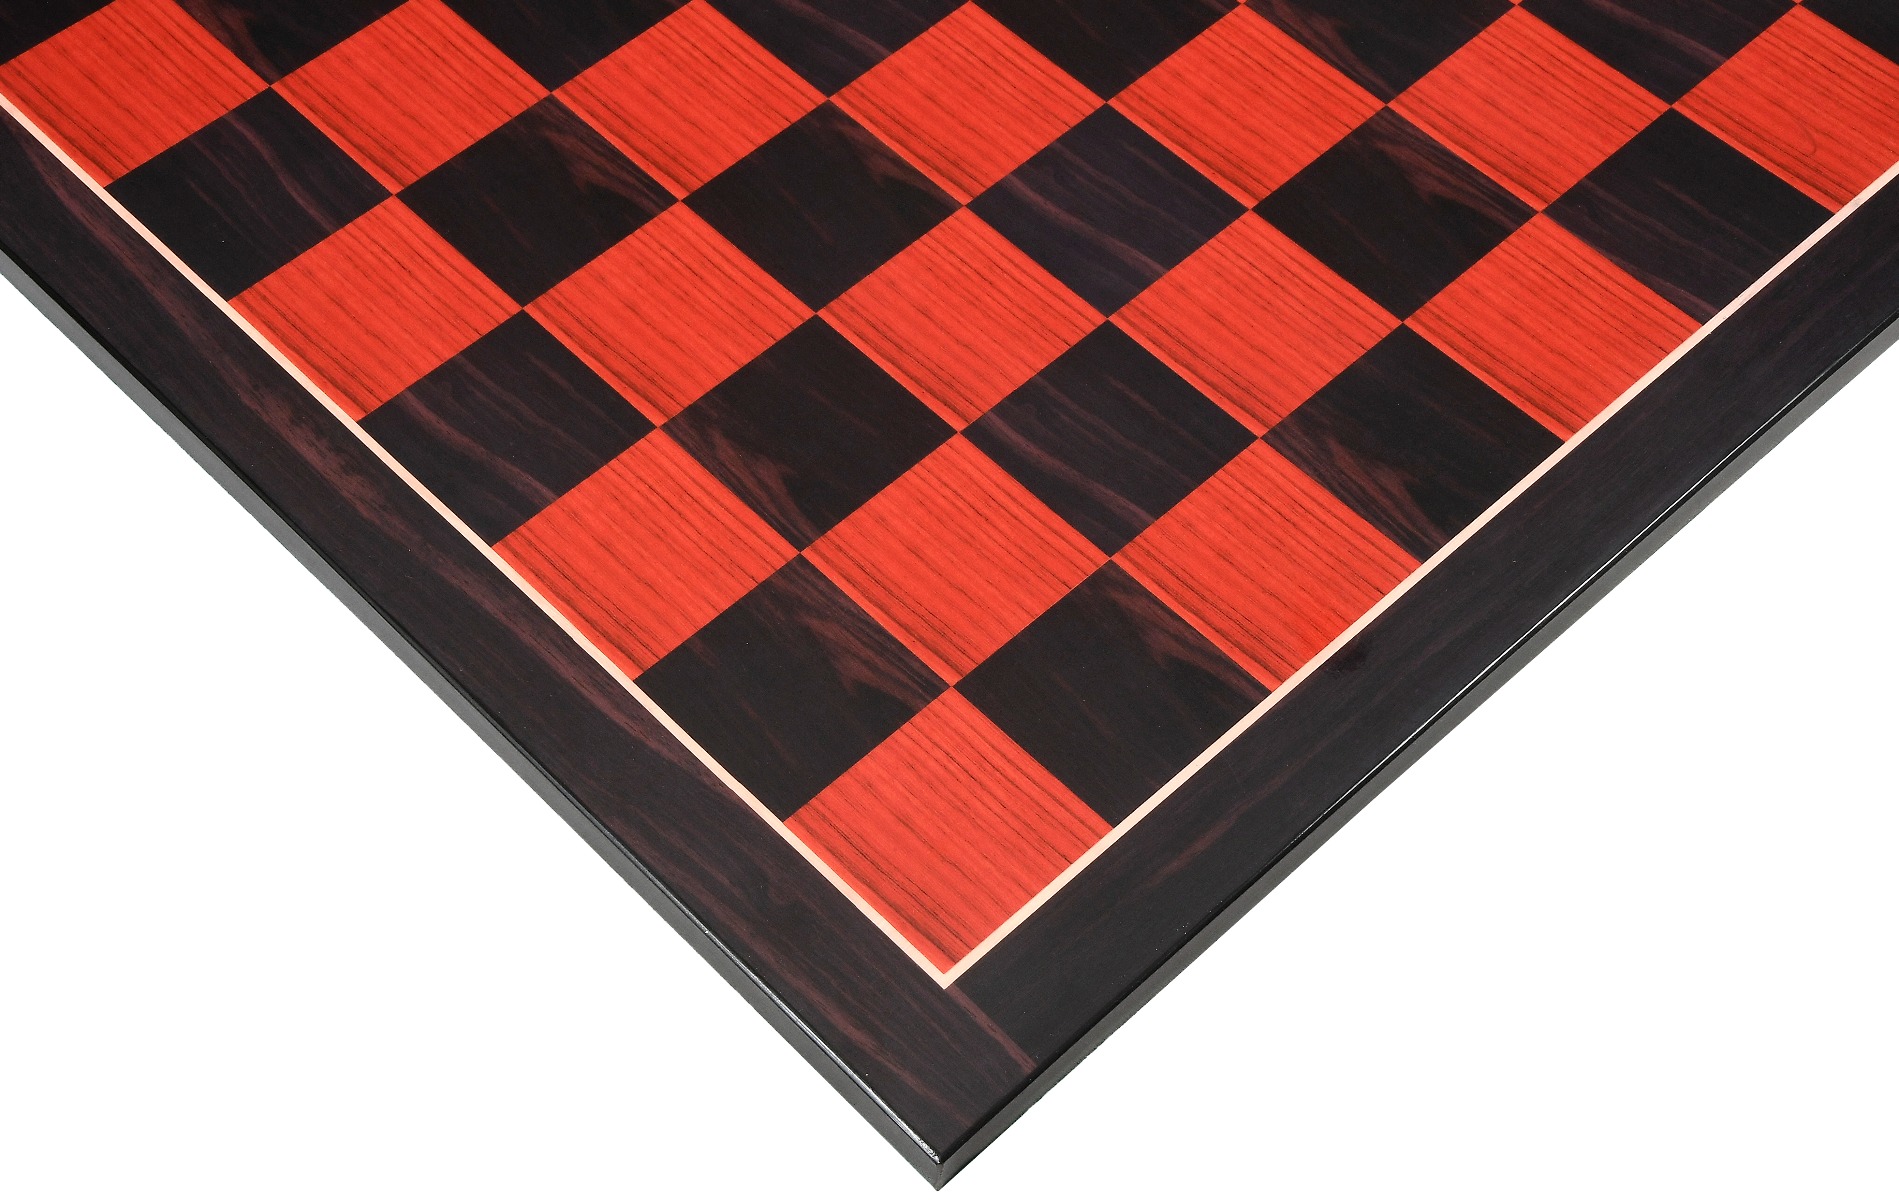 60 mm SKU Wooden Chess Board Ebony Sheesham Wood 23" D0141 Free P&P. 